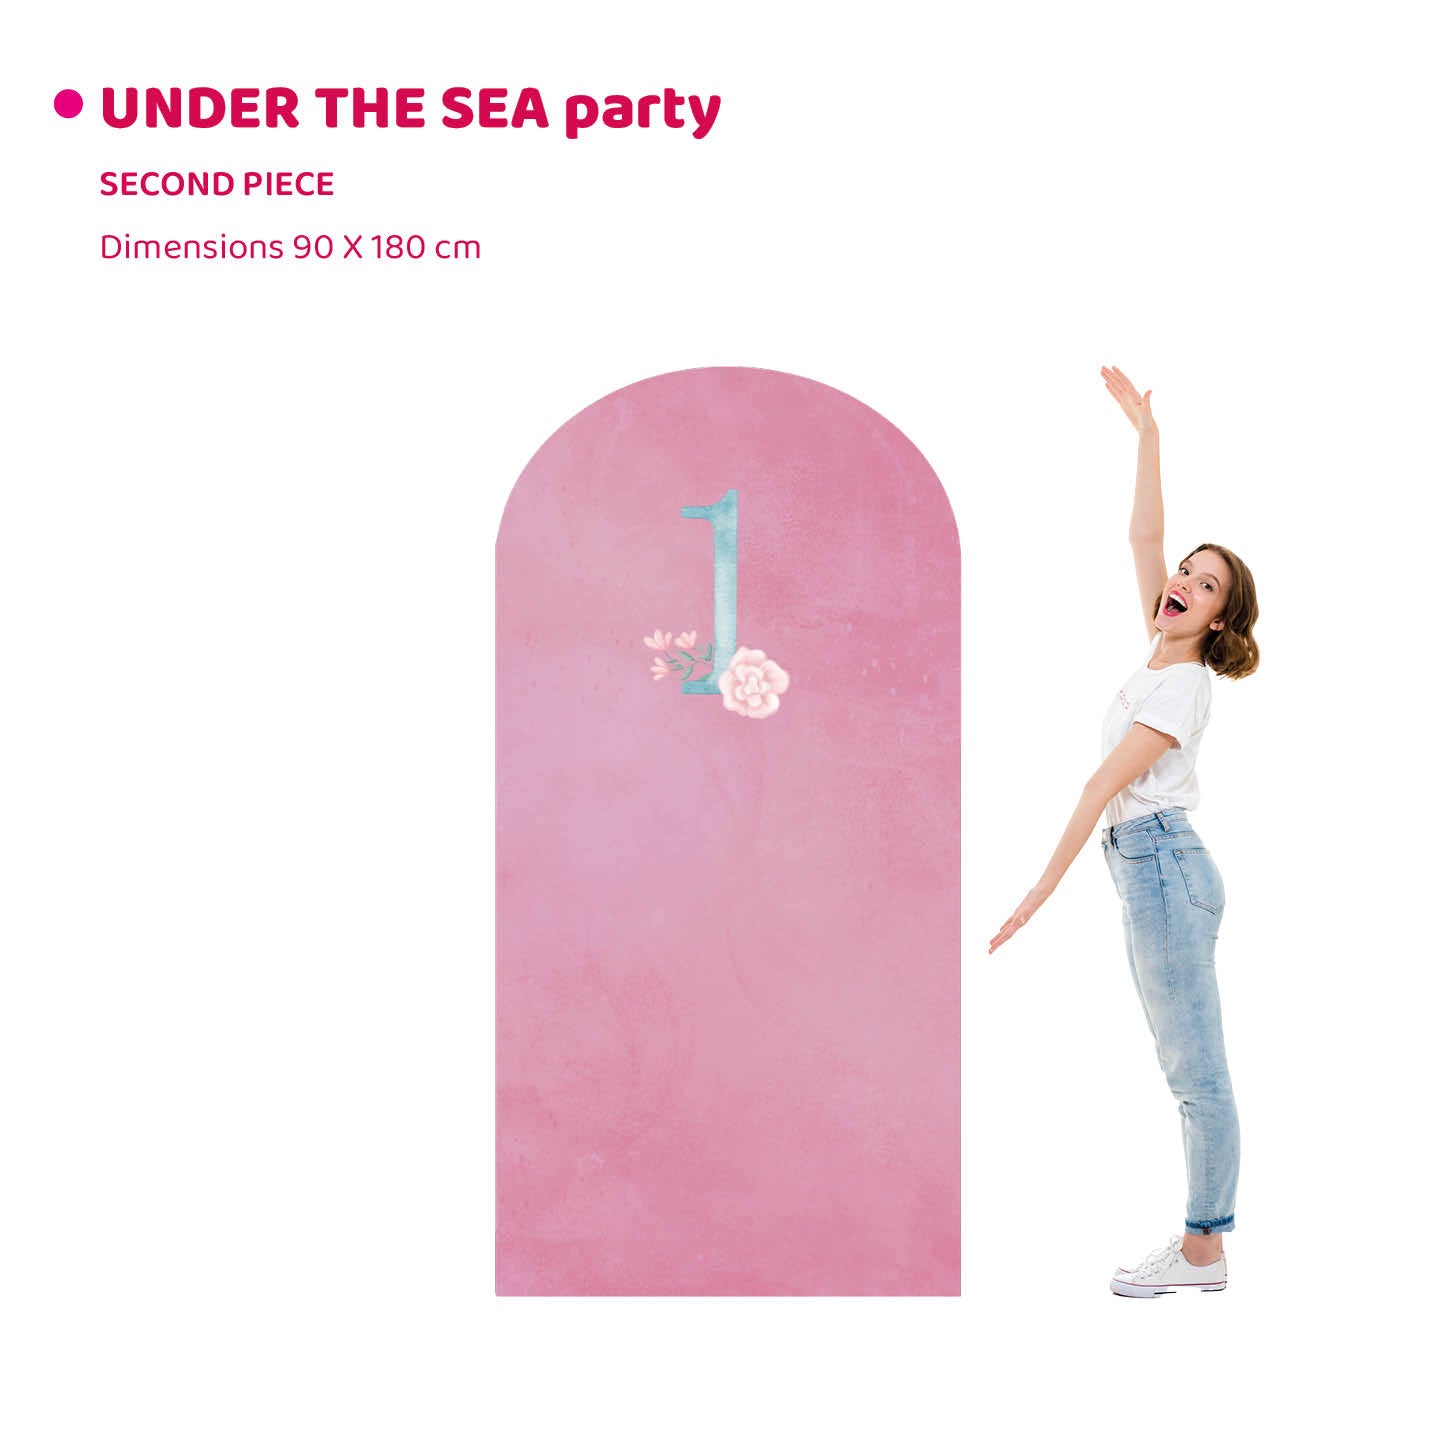 UNDER THE SEA PARTY marmeid doppio da terra | Festa a tema | Backdrop compleanno - Peekaboo